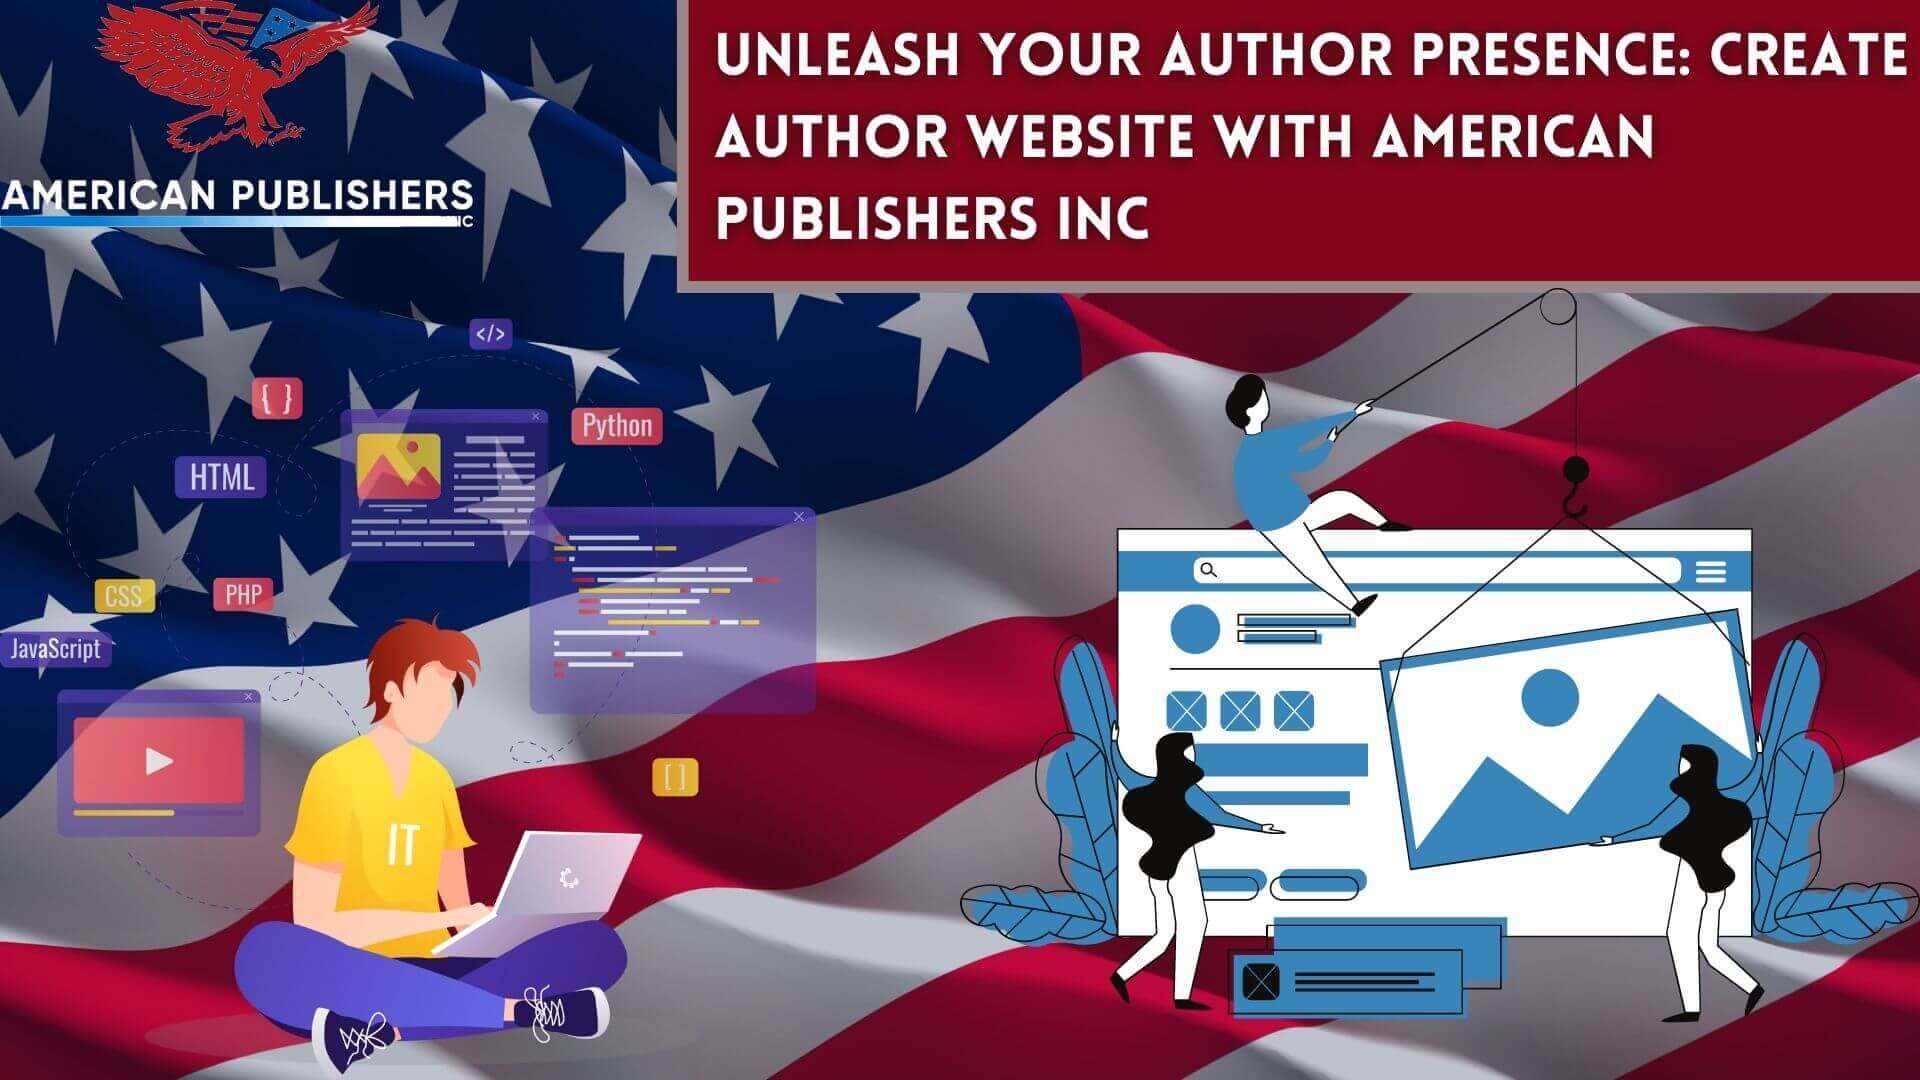 American Publishers Inc. Blogs